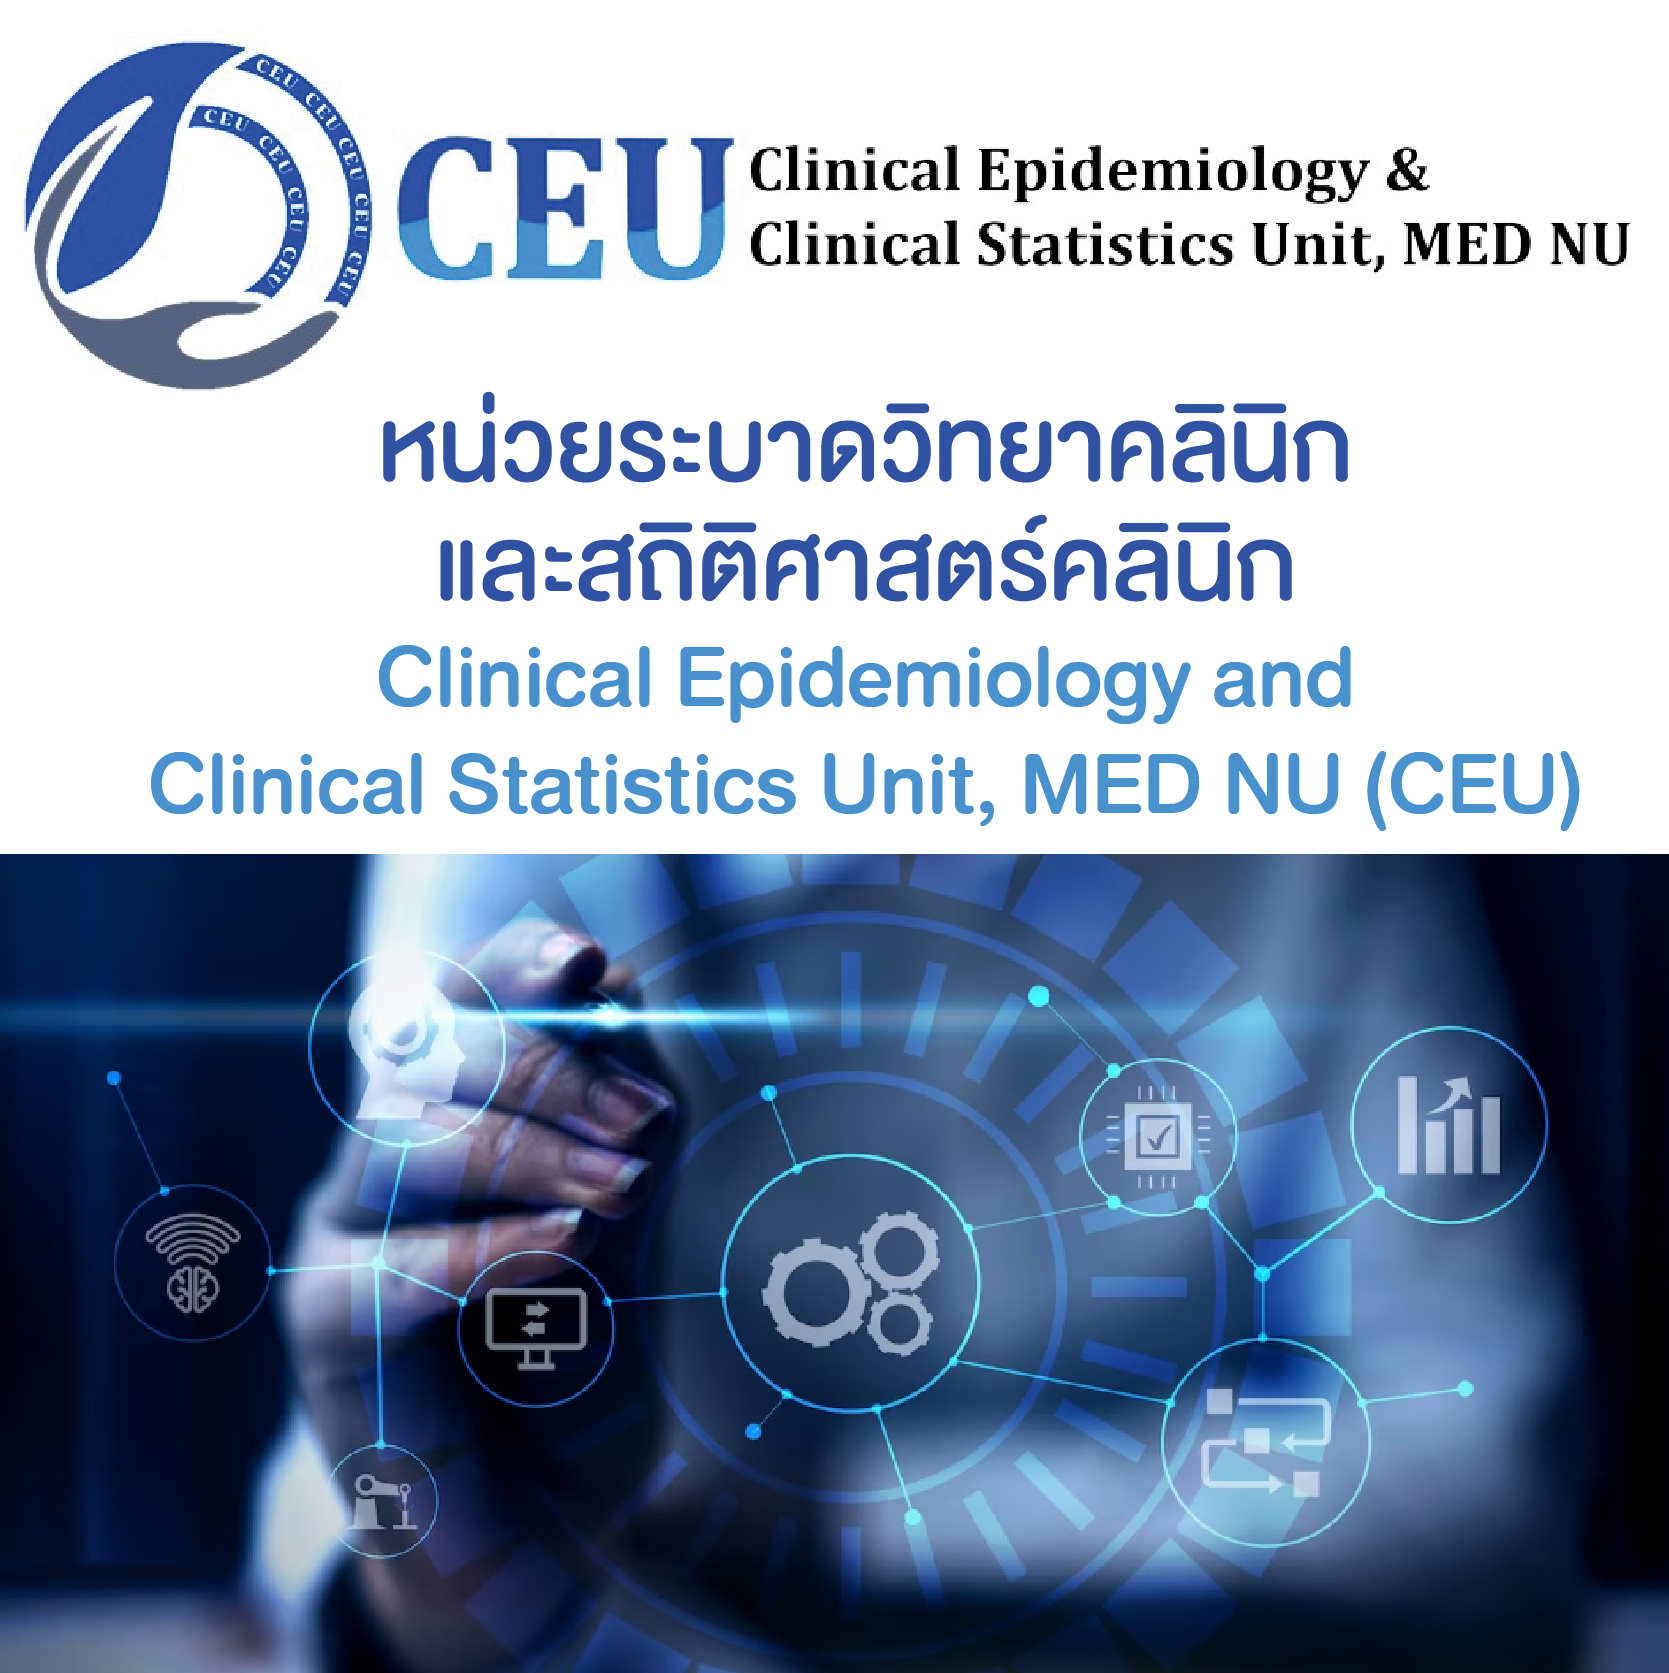 Clinical Epidemiology and Clinical Statistics Unit, MED NU (CEU)